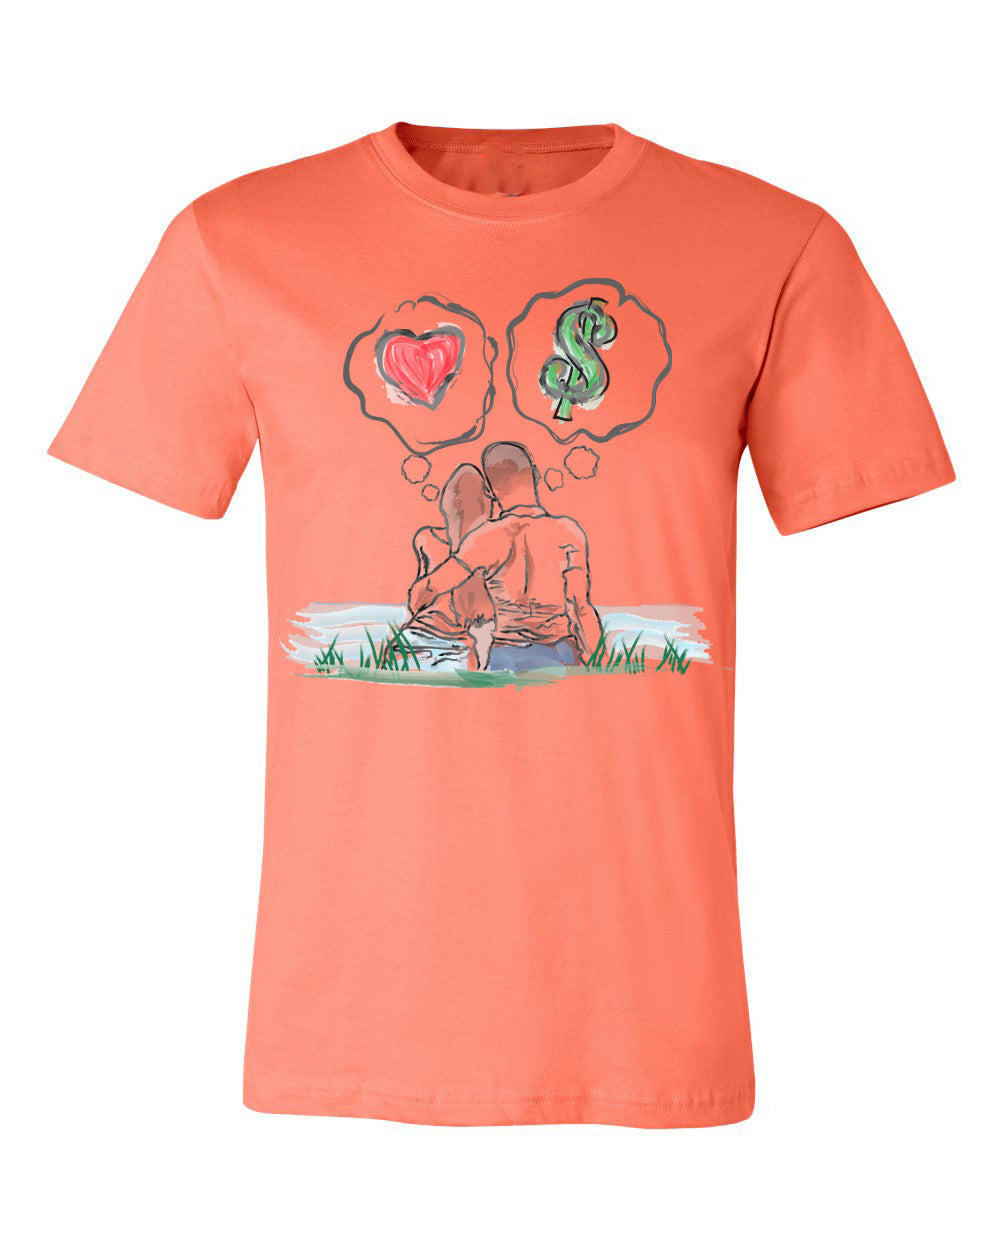 Guy Benson Collection Love Vs Money T-Shirt -Coral